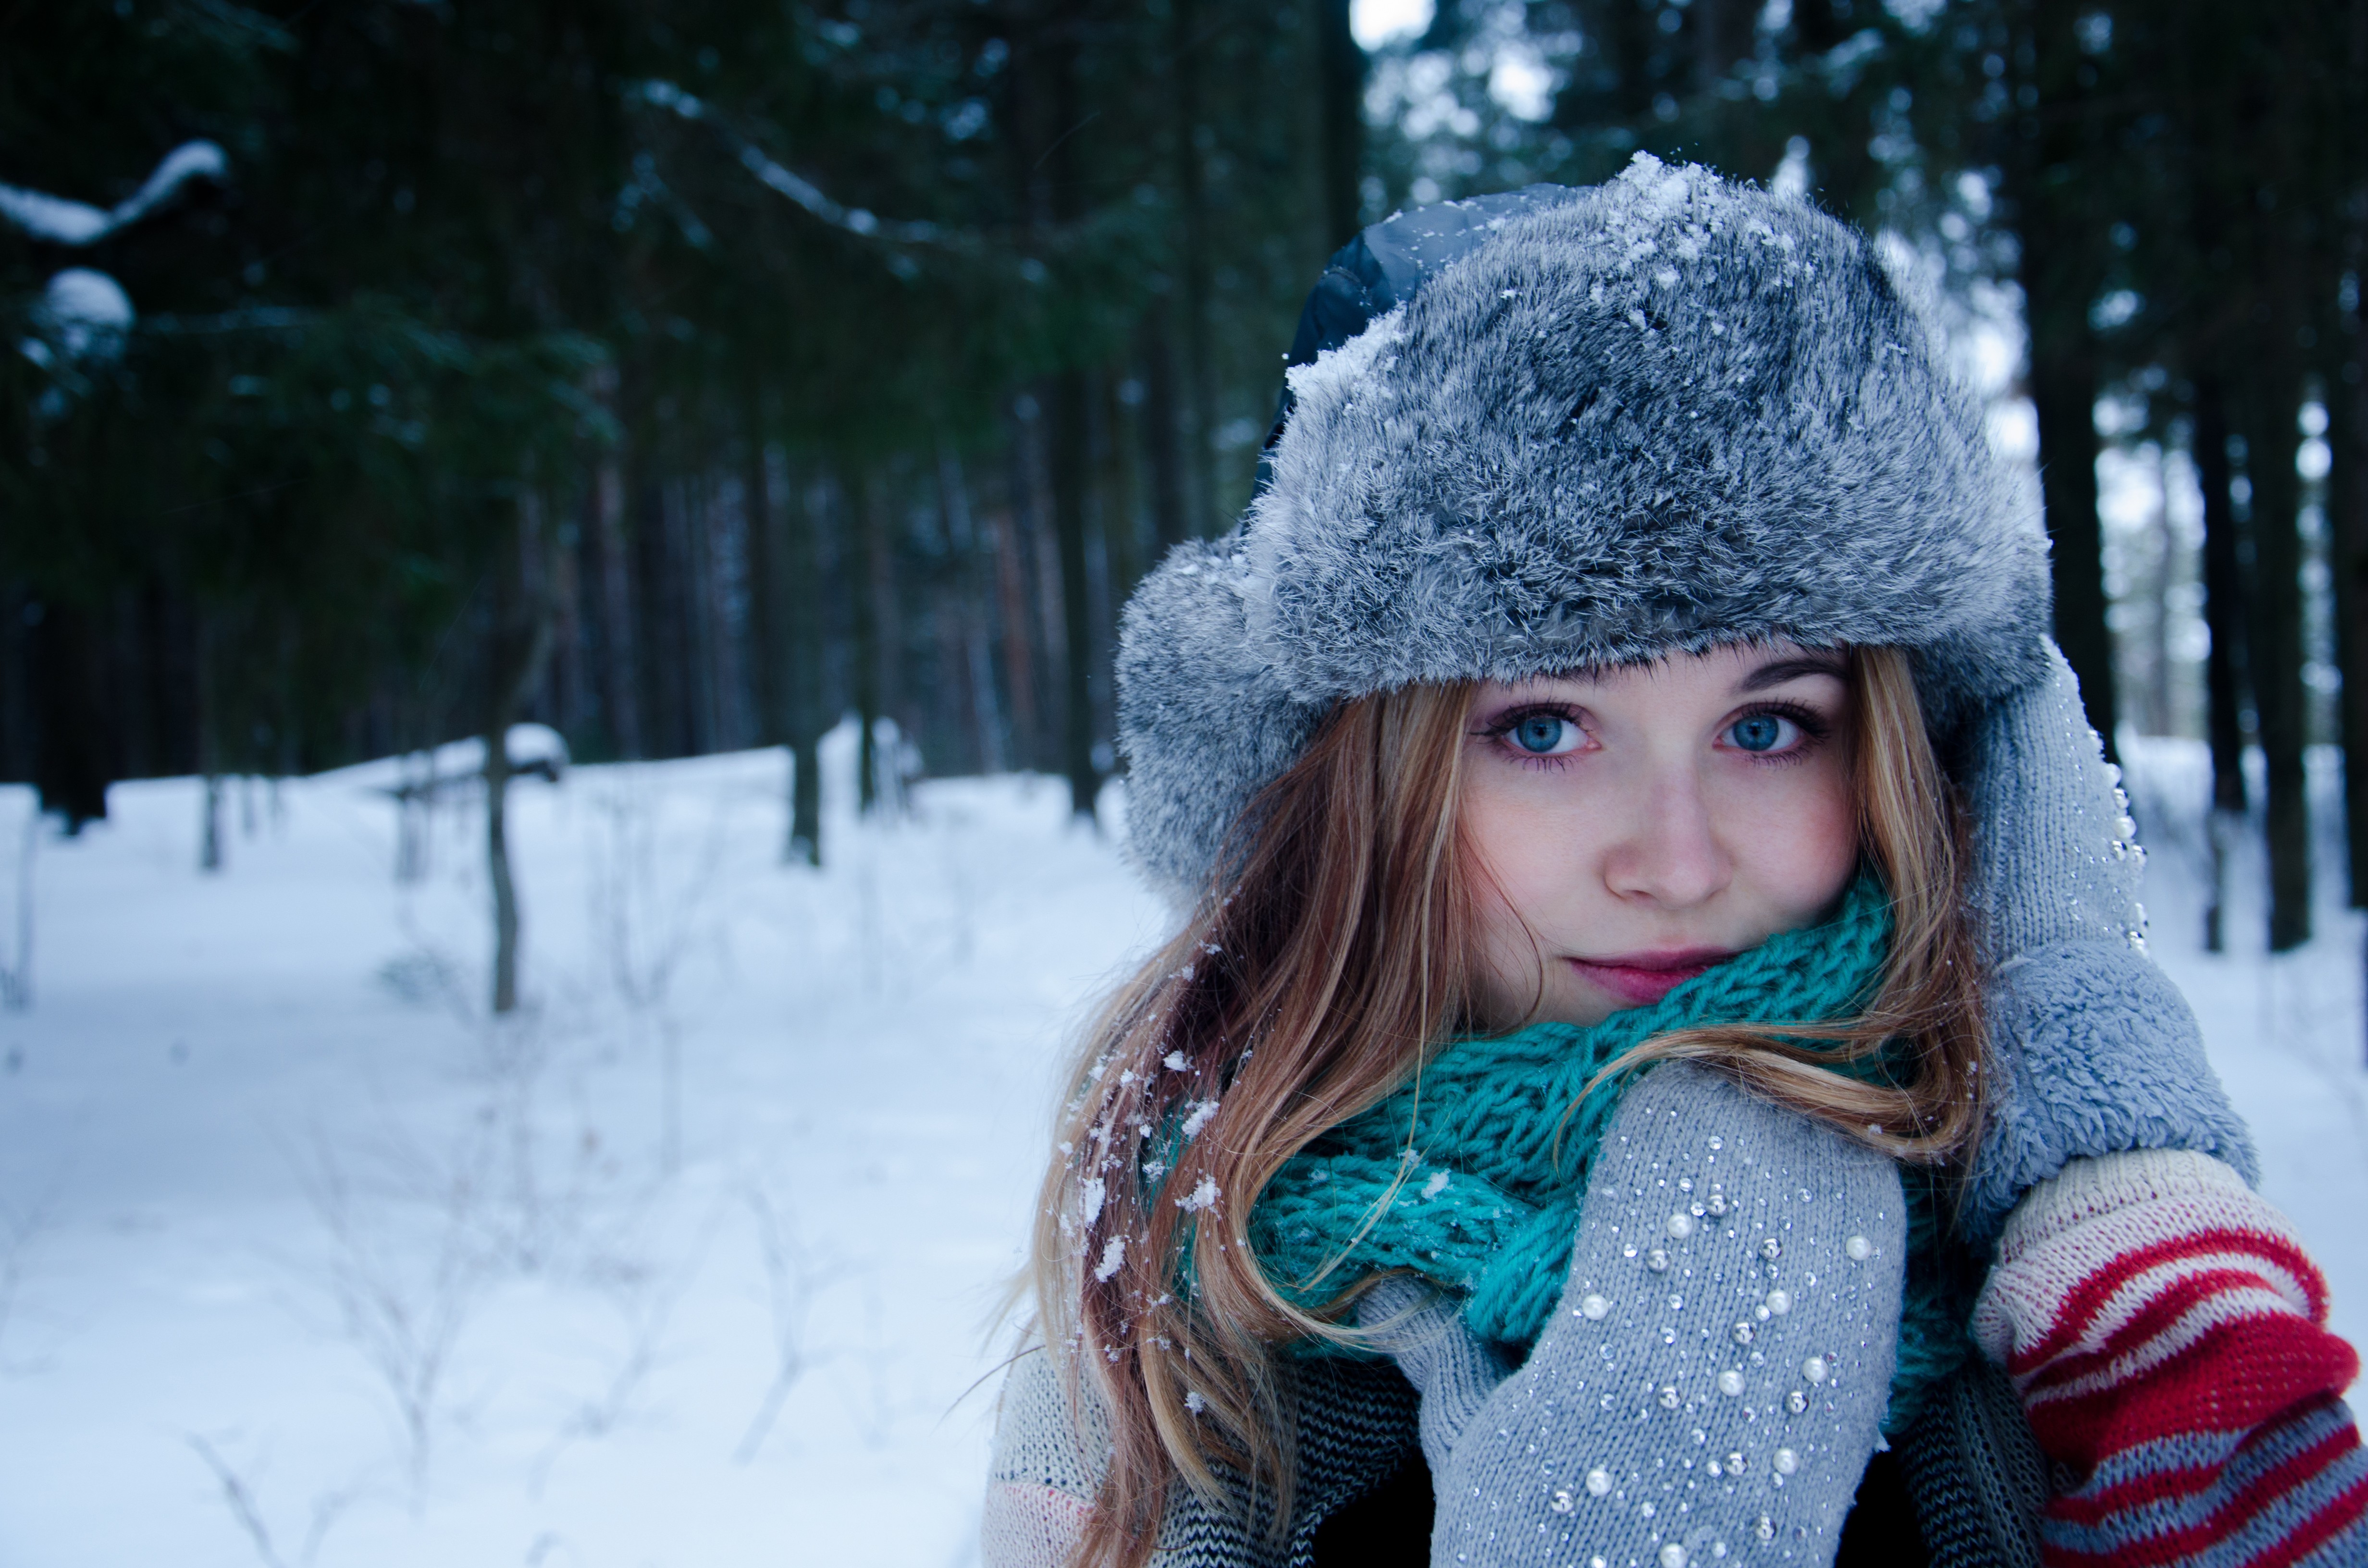 Winter Women Gloves Long Hair Blue Eyes Women Blonde Funny Hats Women Outdoors Snow 4928x3264